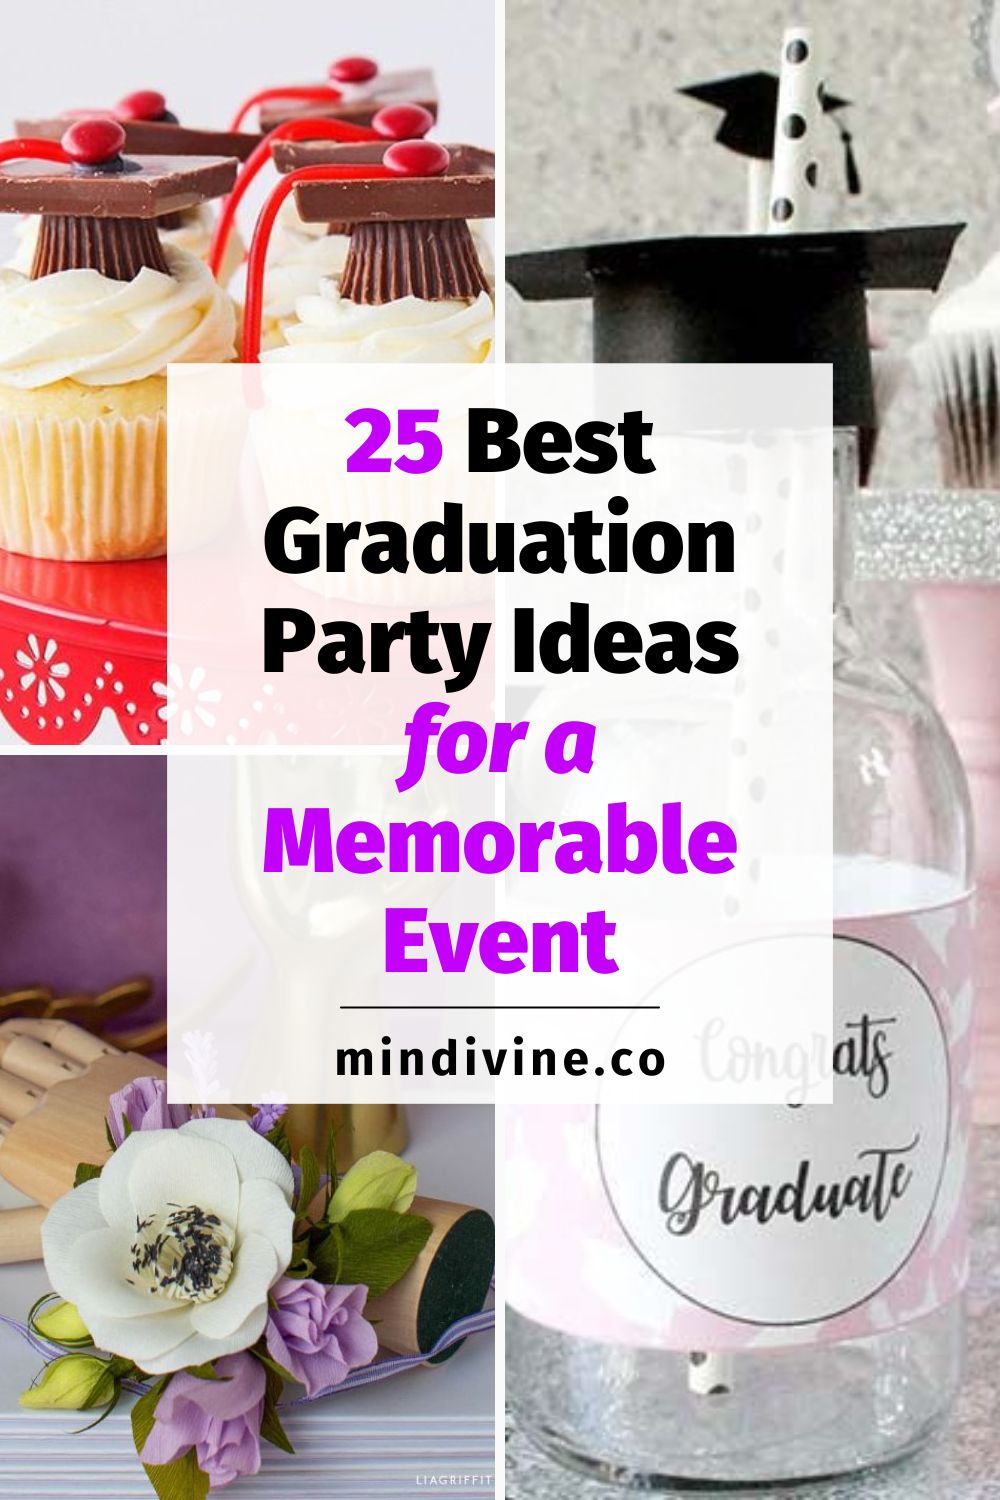 4 graduation party ideas